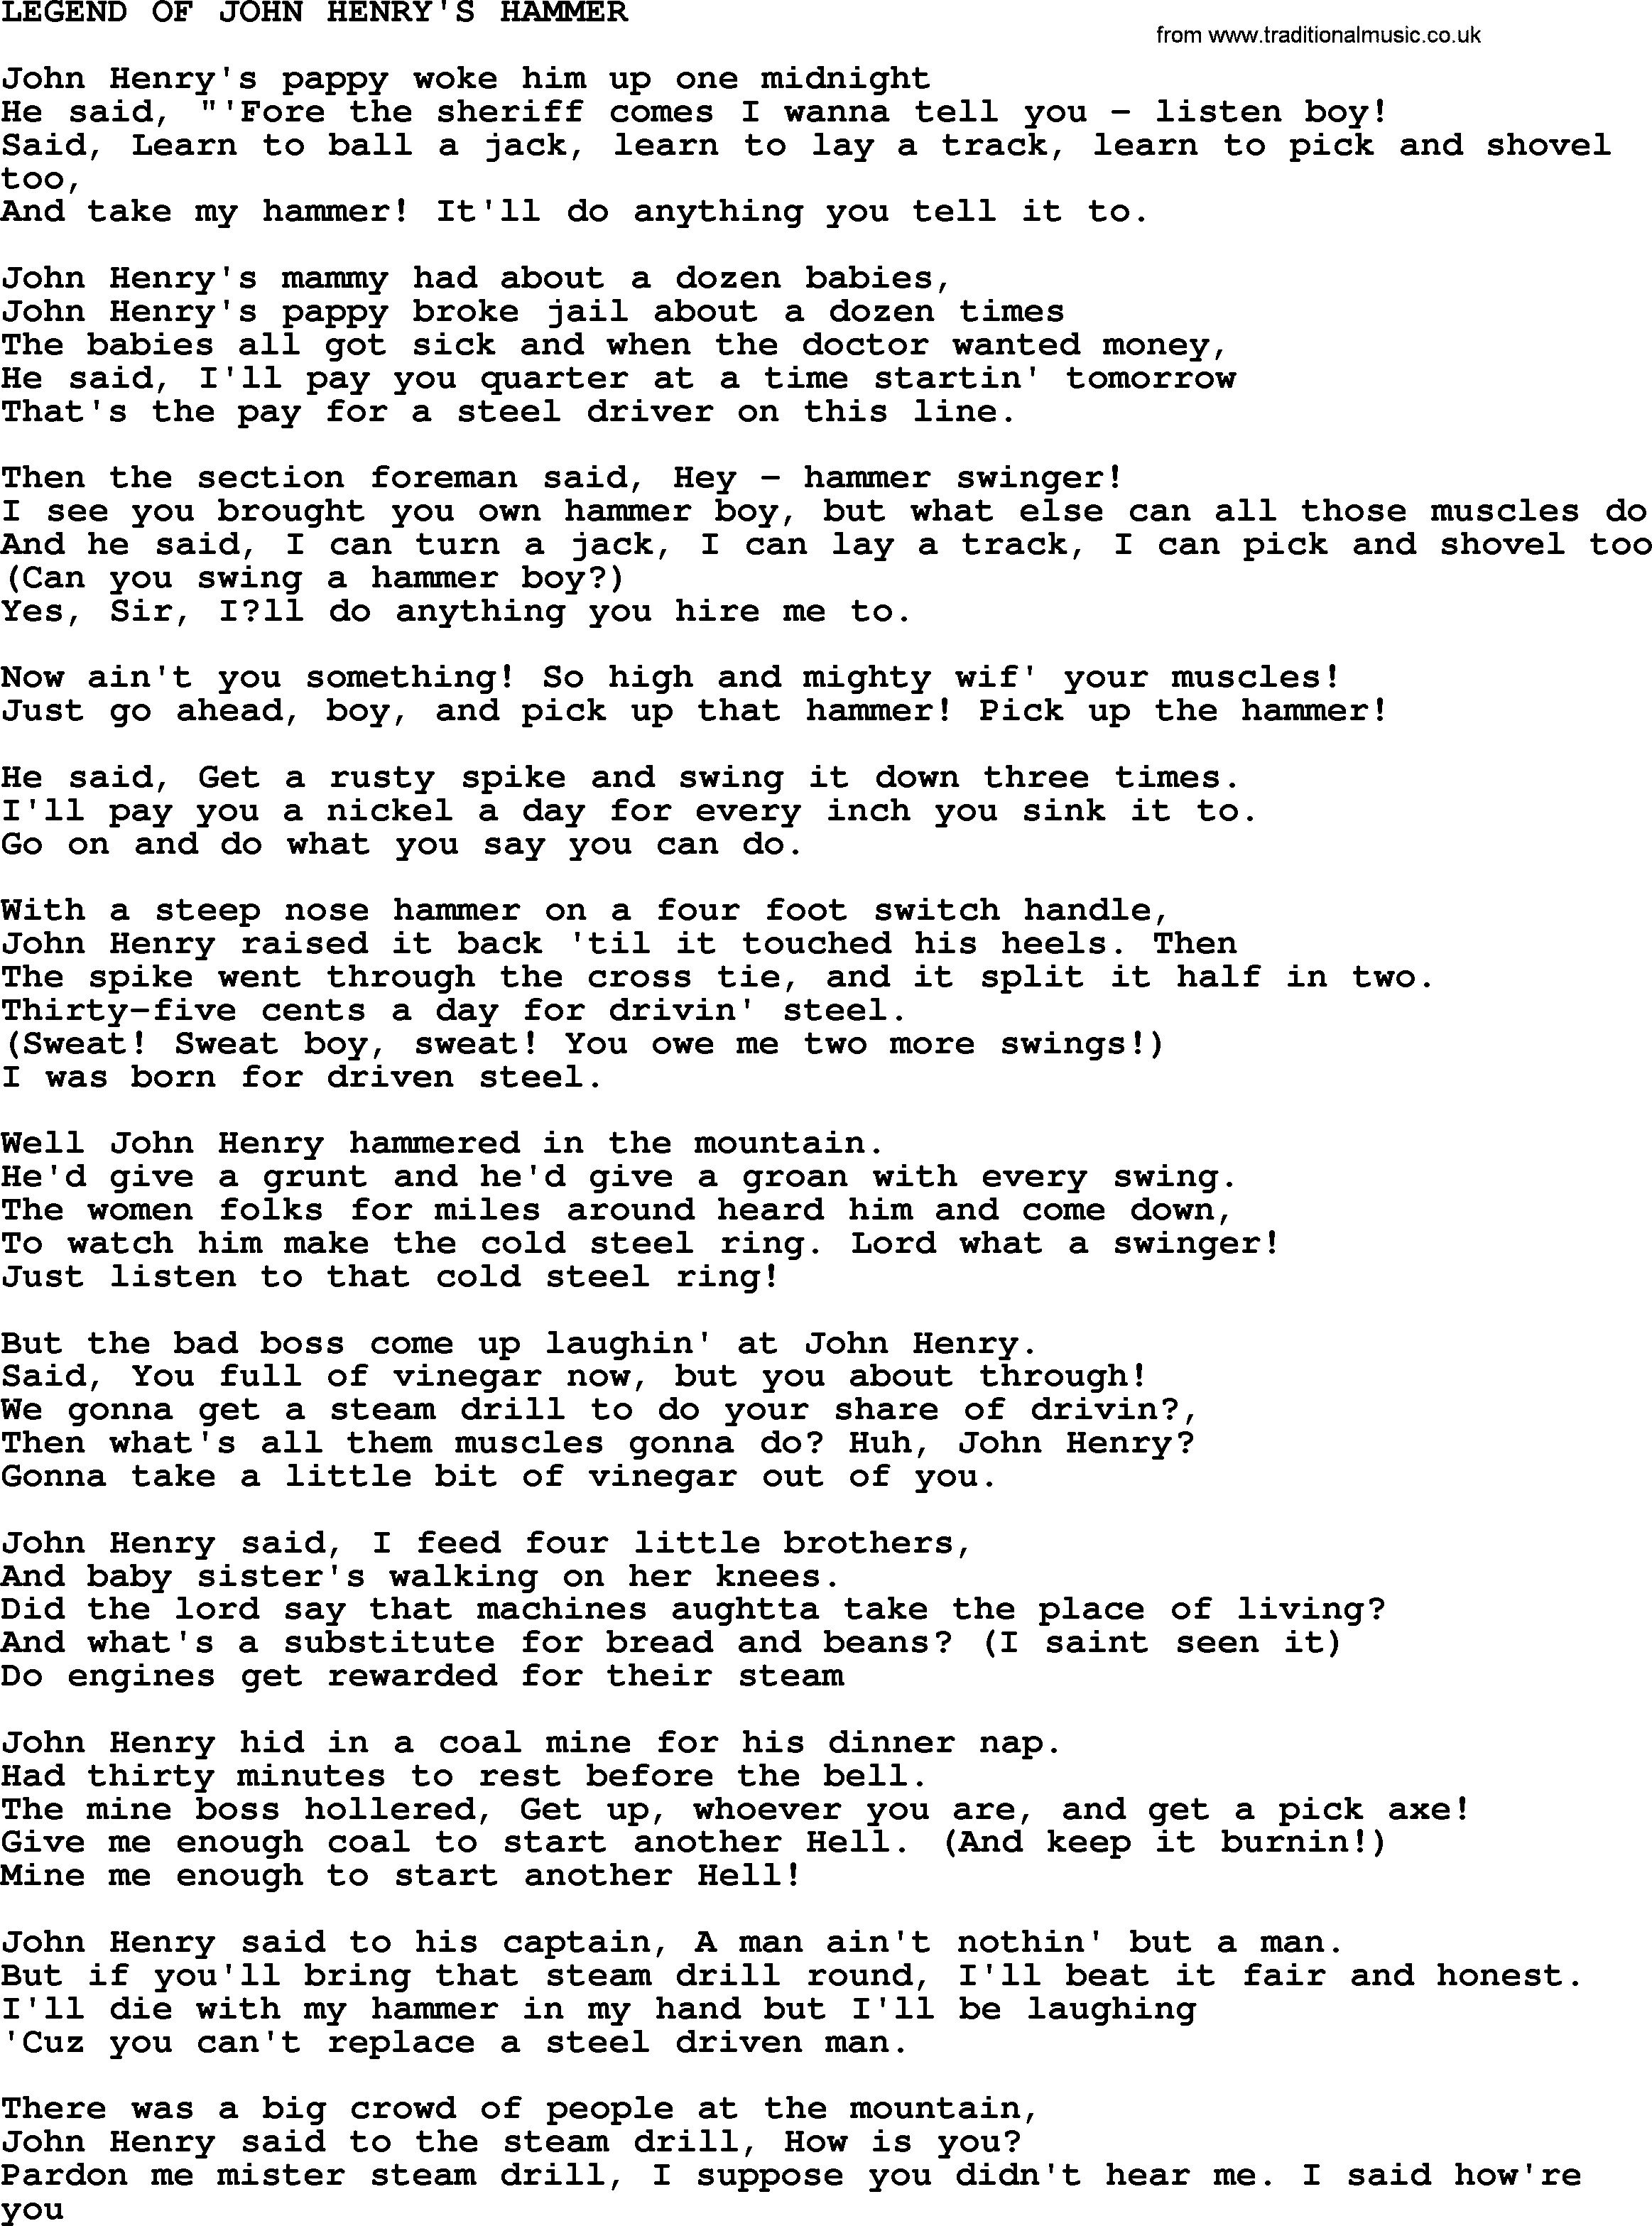 Johnny Cash song Legend Of John Henry's Hammer.txt lyrics